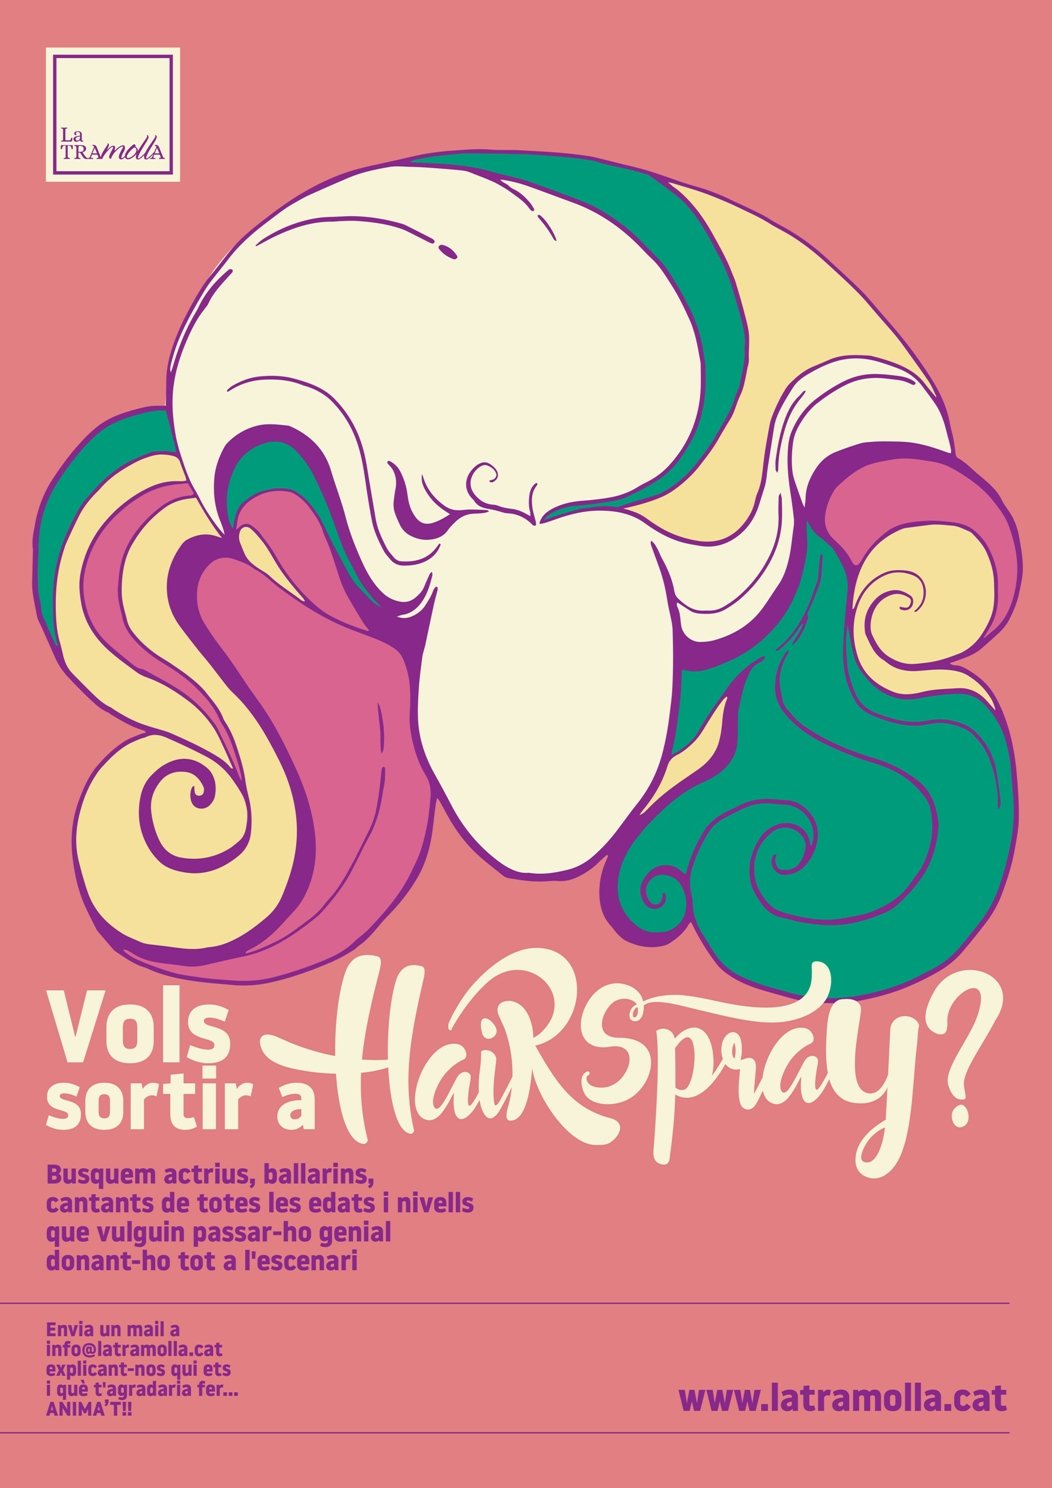 Aquest any farem “Hairspray”, i et necessitem!